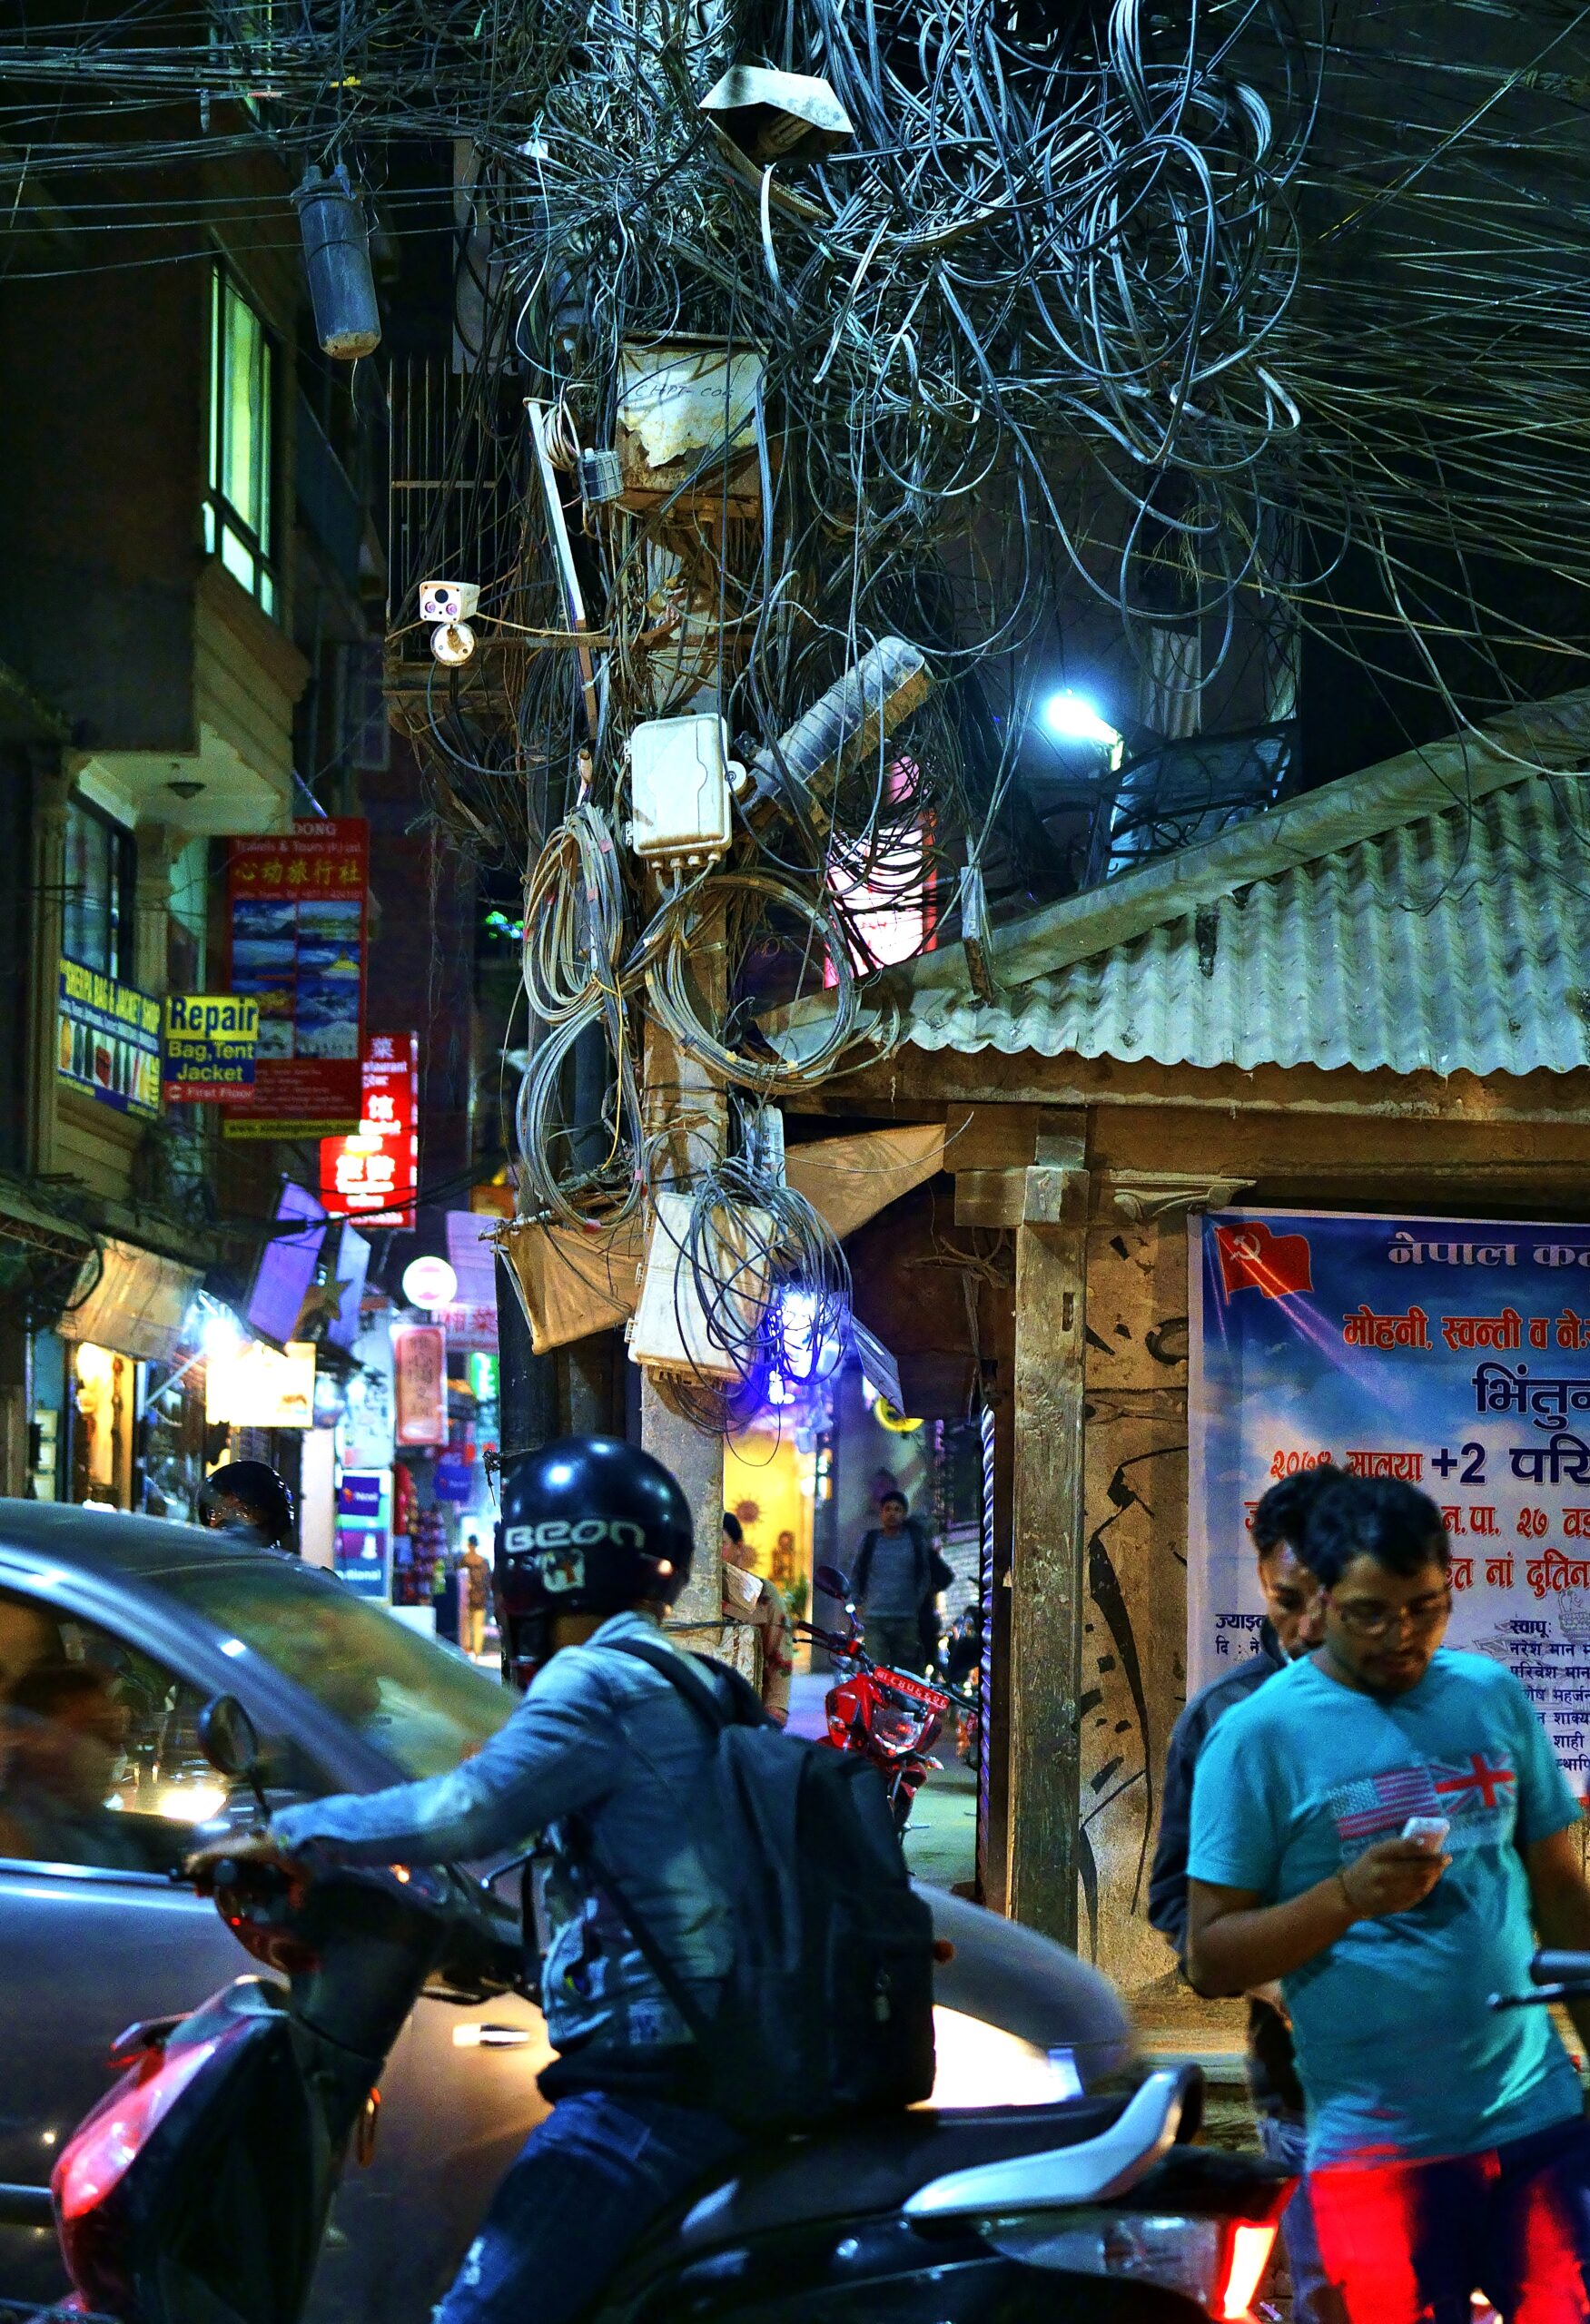 Traffic jam, black spagetti and focus on mobile in Thamel, down town Kathmandu, Nepal